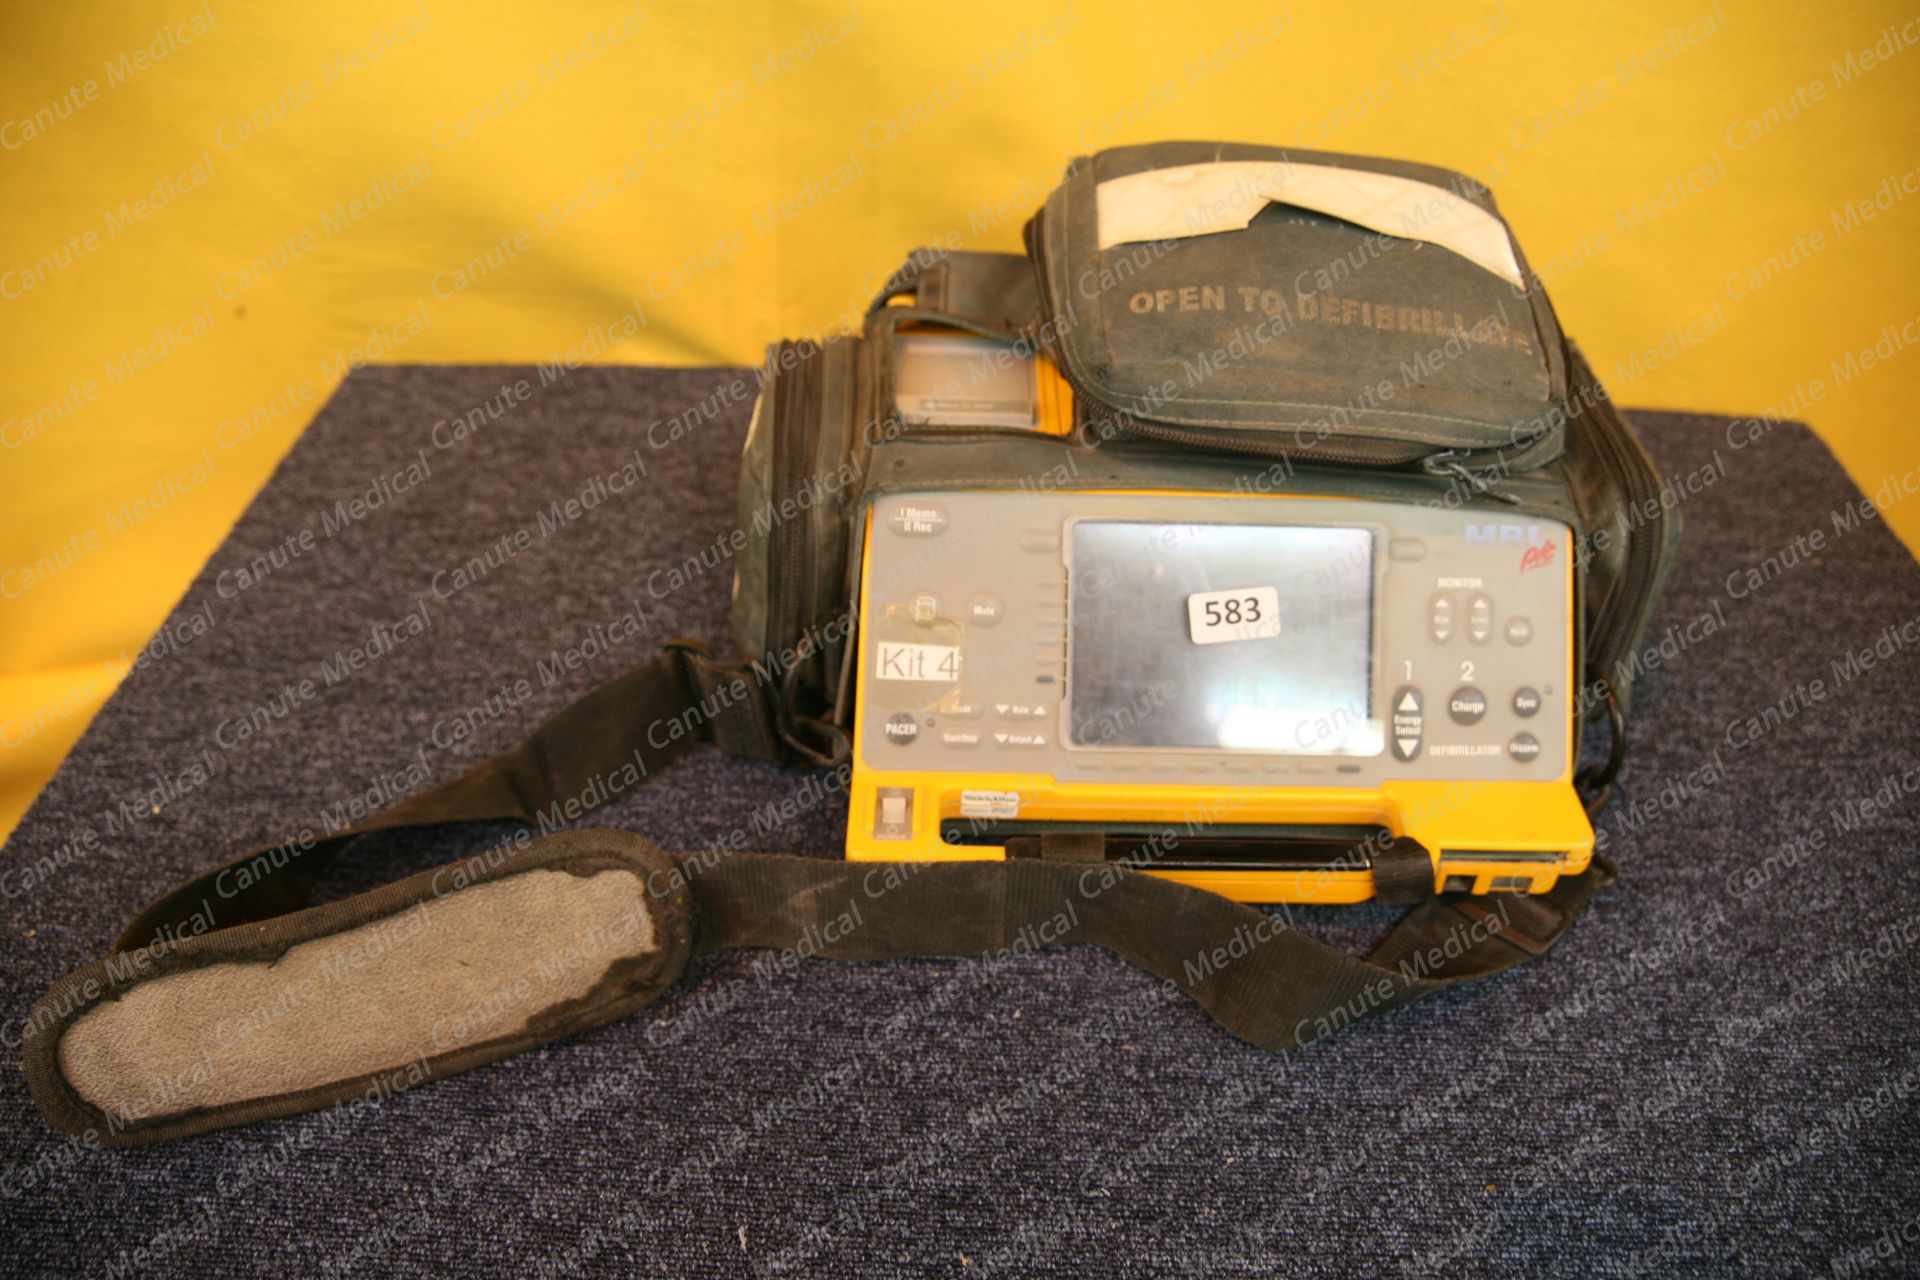 MRL PIC Defibrillator with Bag (9692)